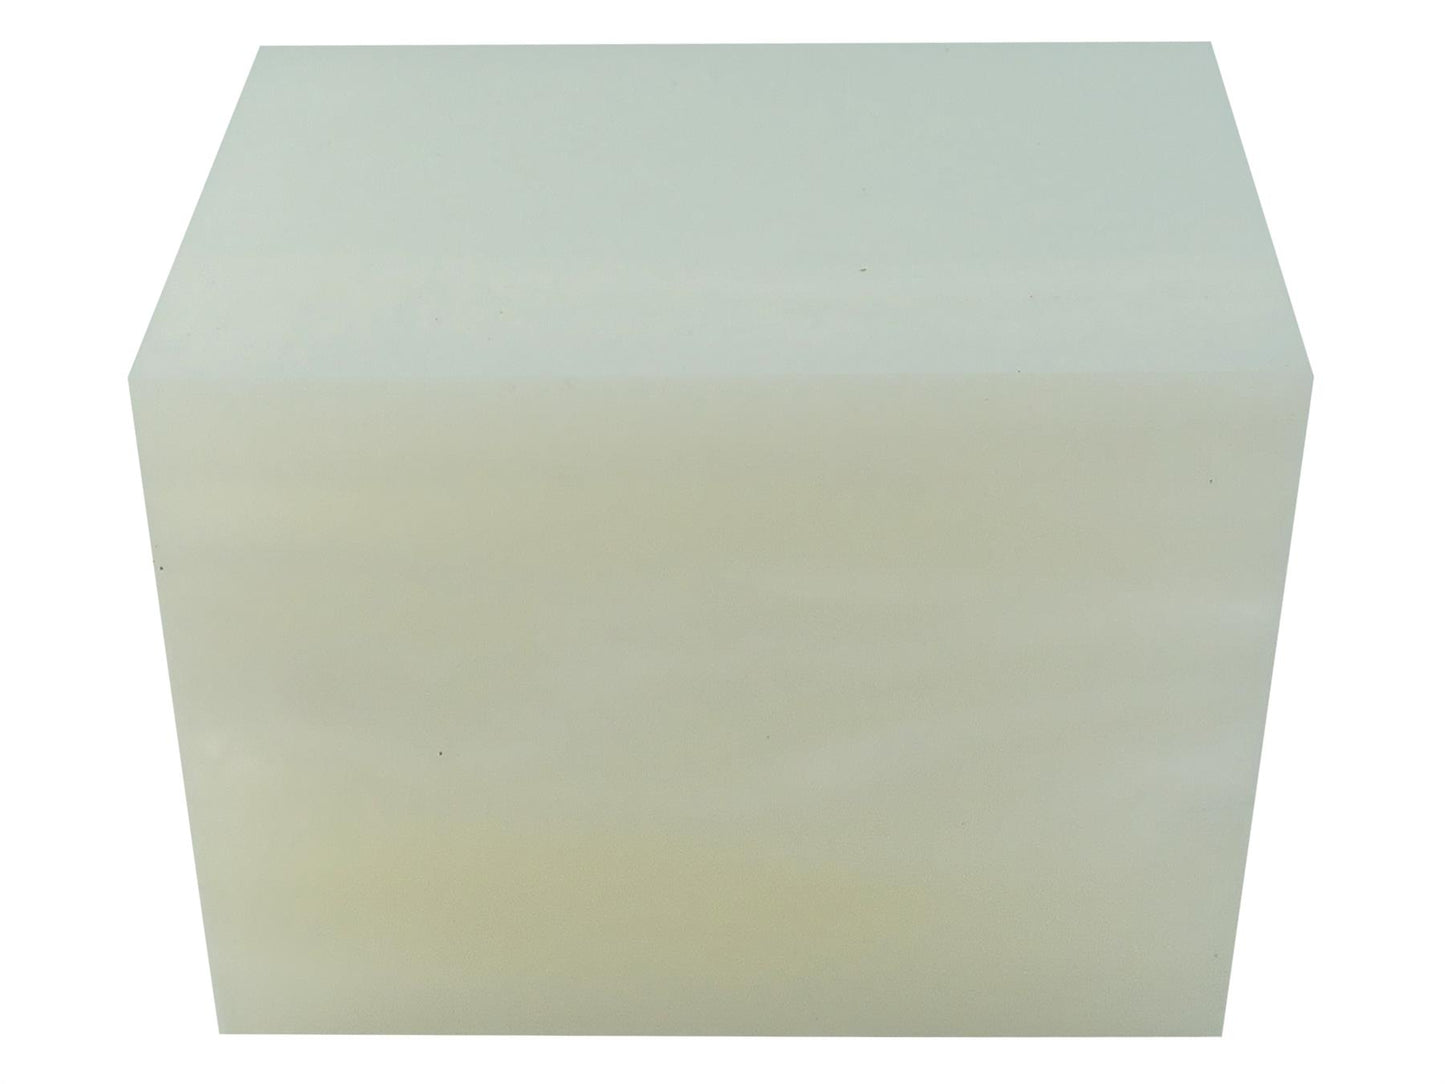 Turners' Mill Wedding White Pearl Kirinite Acrylic Block - 64x42x42mm (2.5x1.65x1.65")